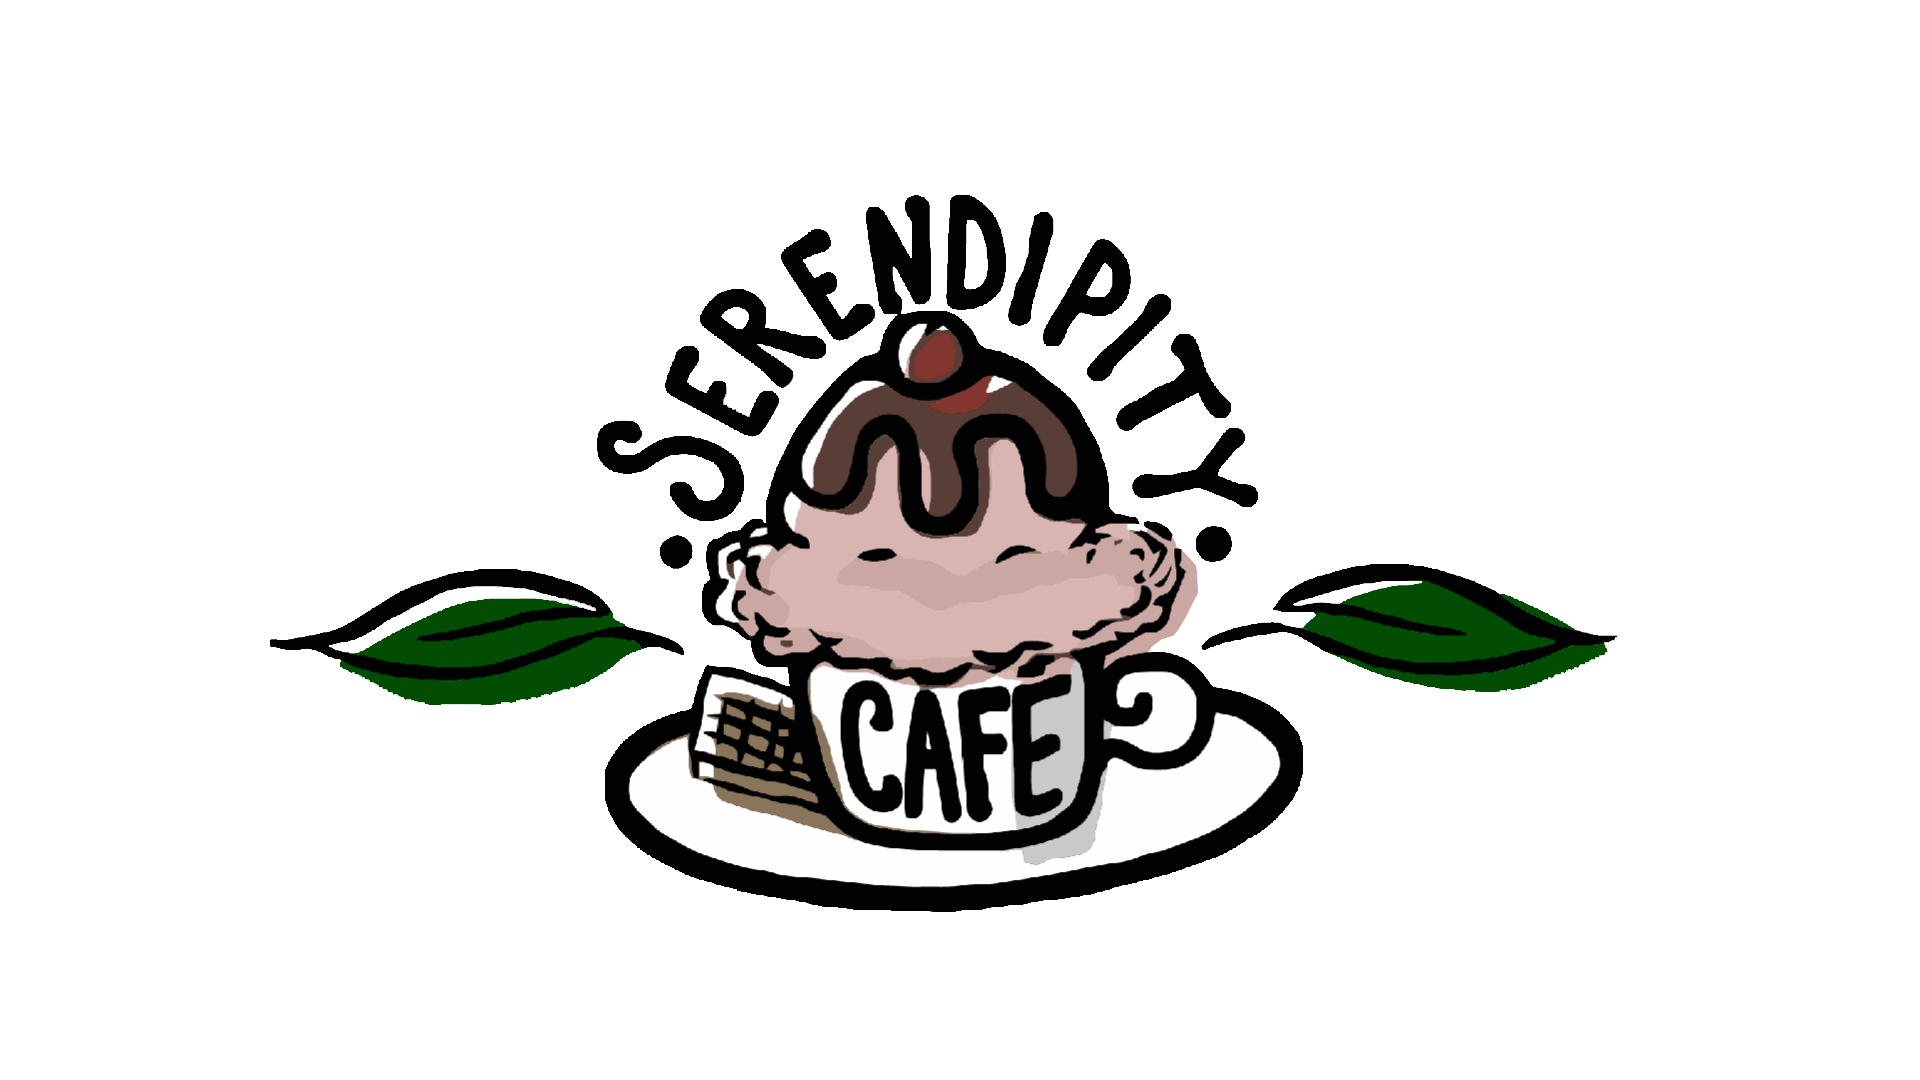 Ice Cream Restaurant Logo - Serendipity Cafe: Ice Cream, Coffee, Waffles, Crepes, Espresso